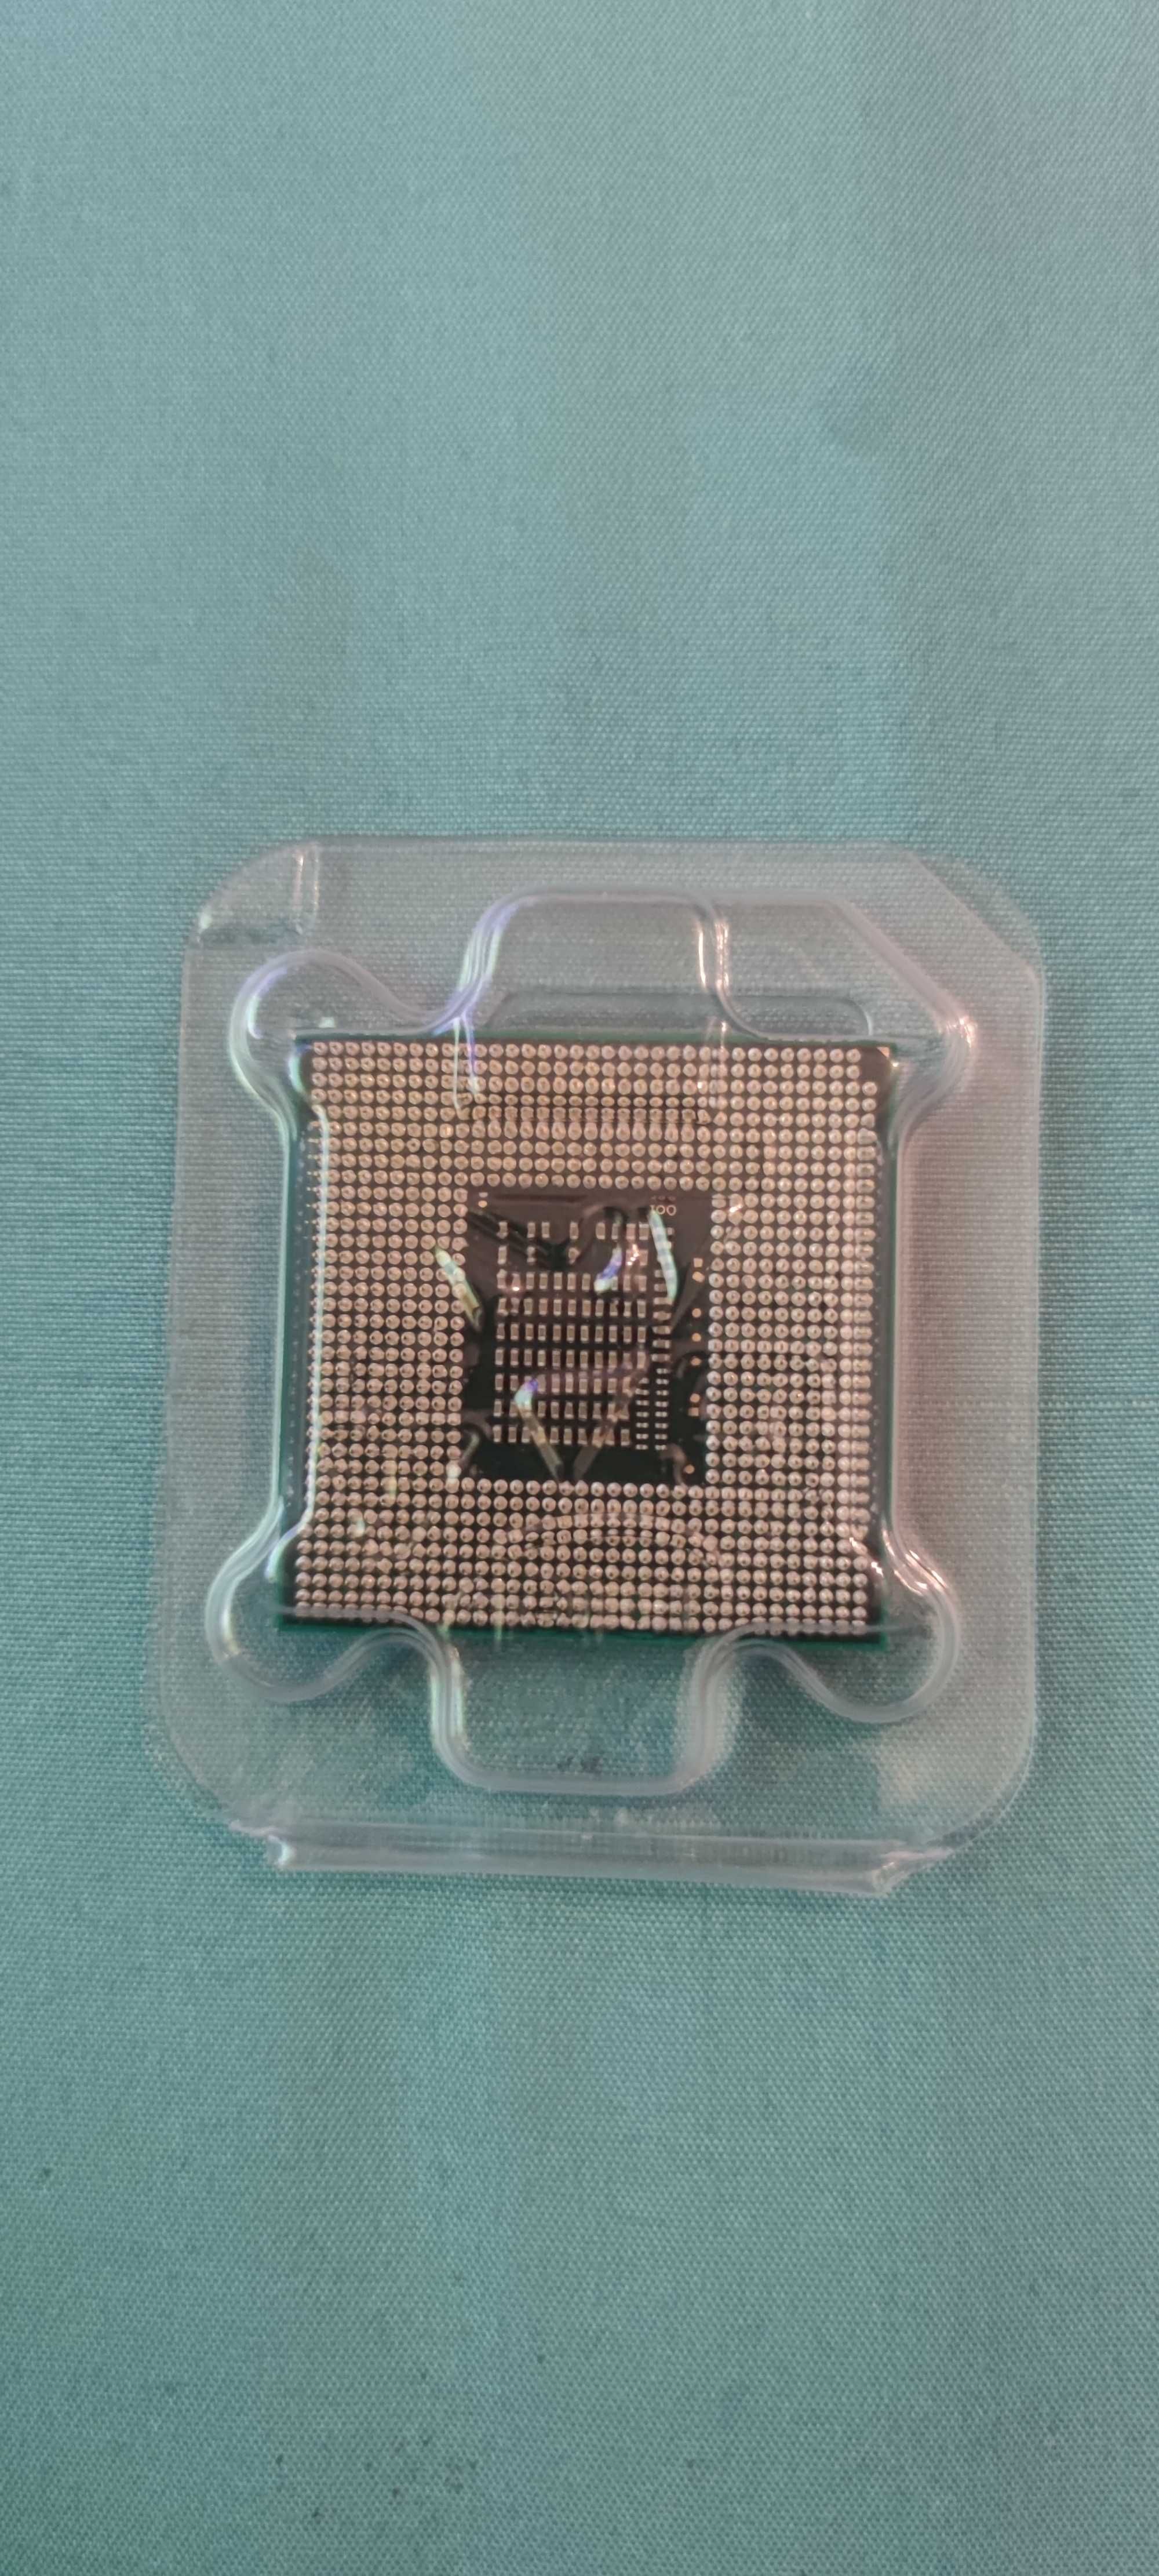 Processador Core i5- 2450M sroch 2.5 ghz CPu núcleo duplo quad-thread